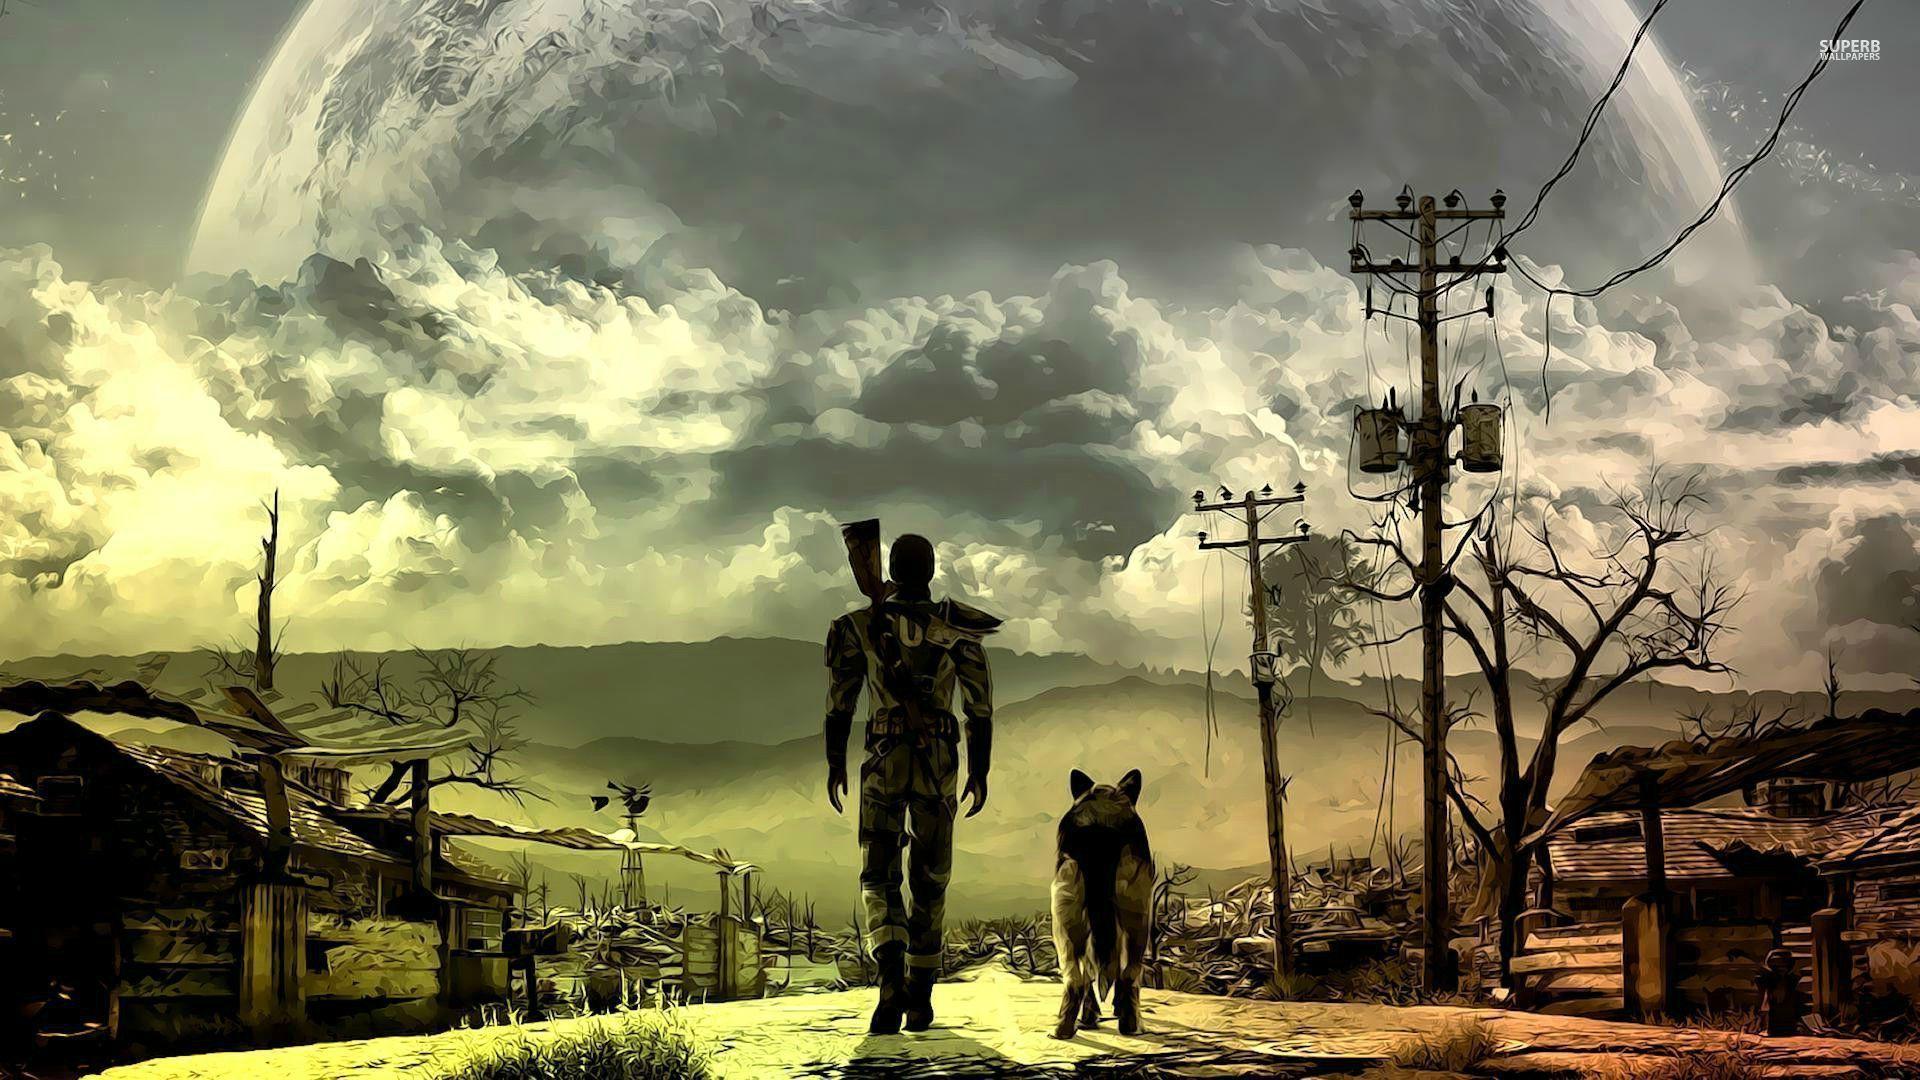 Fallout Wallpaper in 1080p